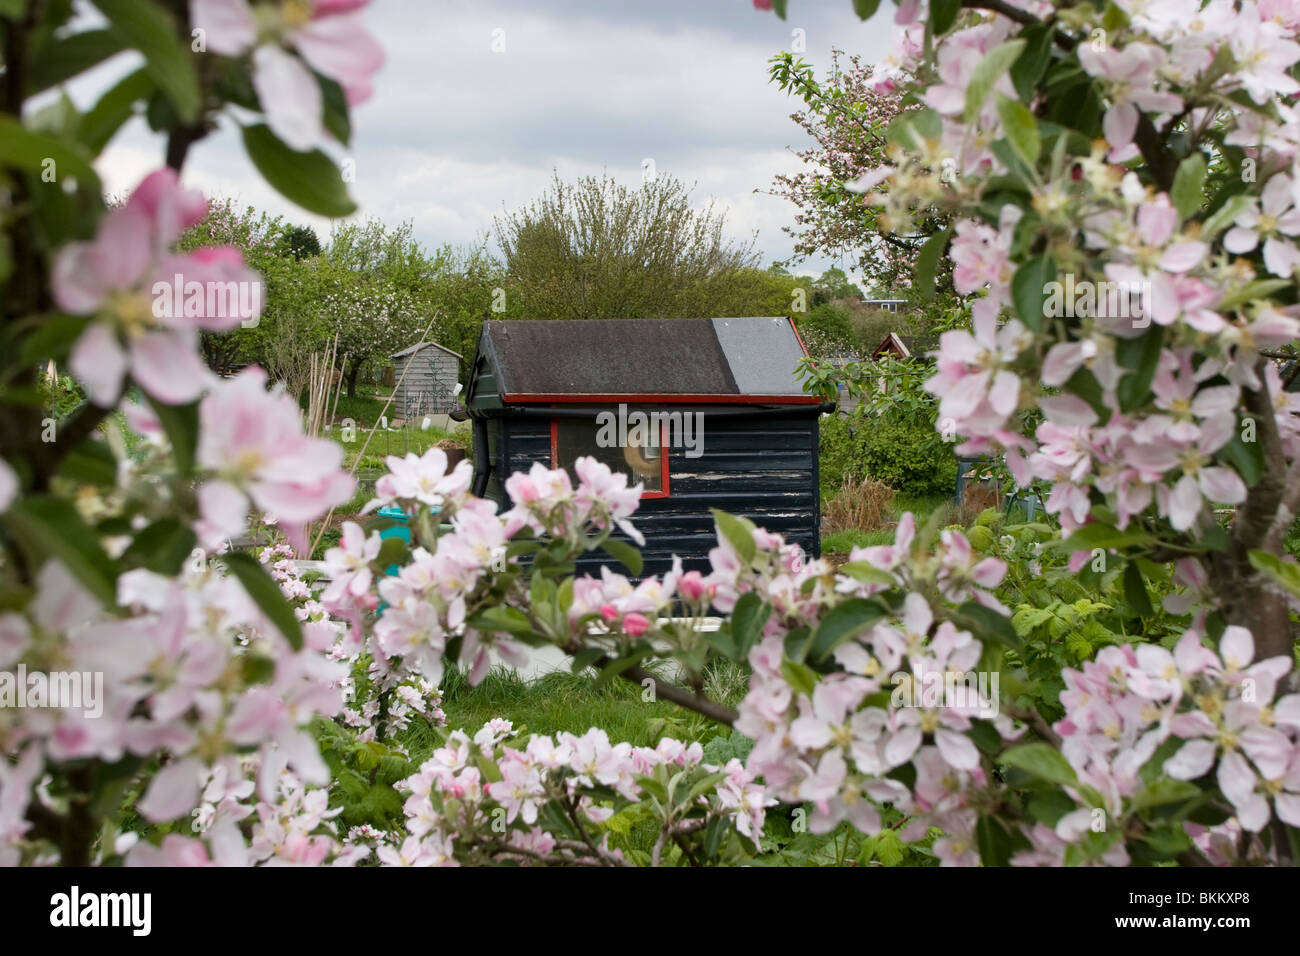 Horfield Allotment sheds etc., seen through apple blossom.  Horfield, Bristol, England. Stock Photo